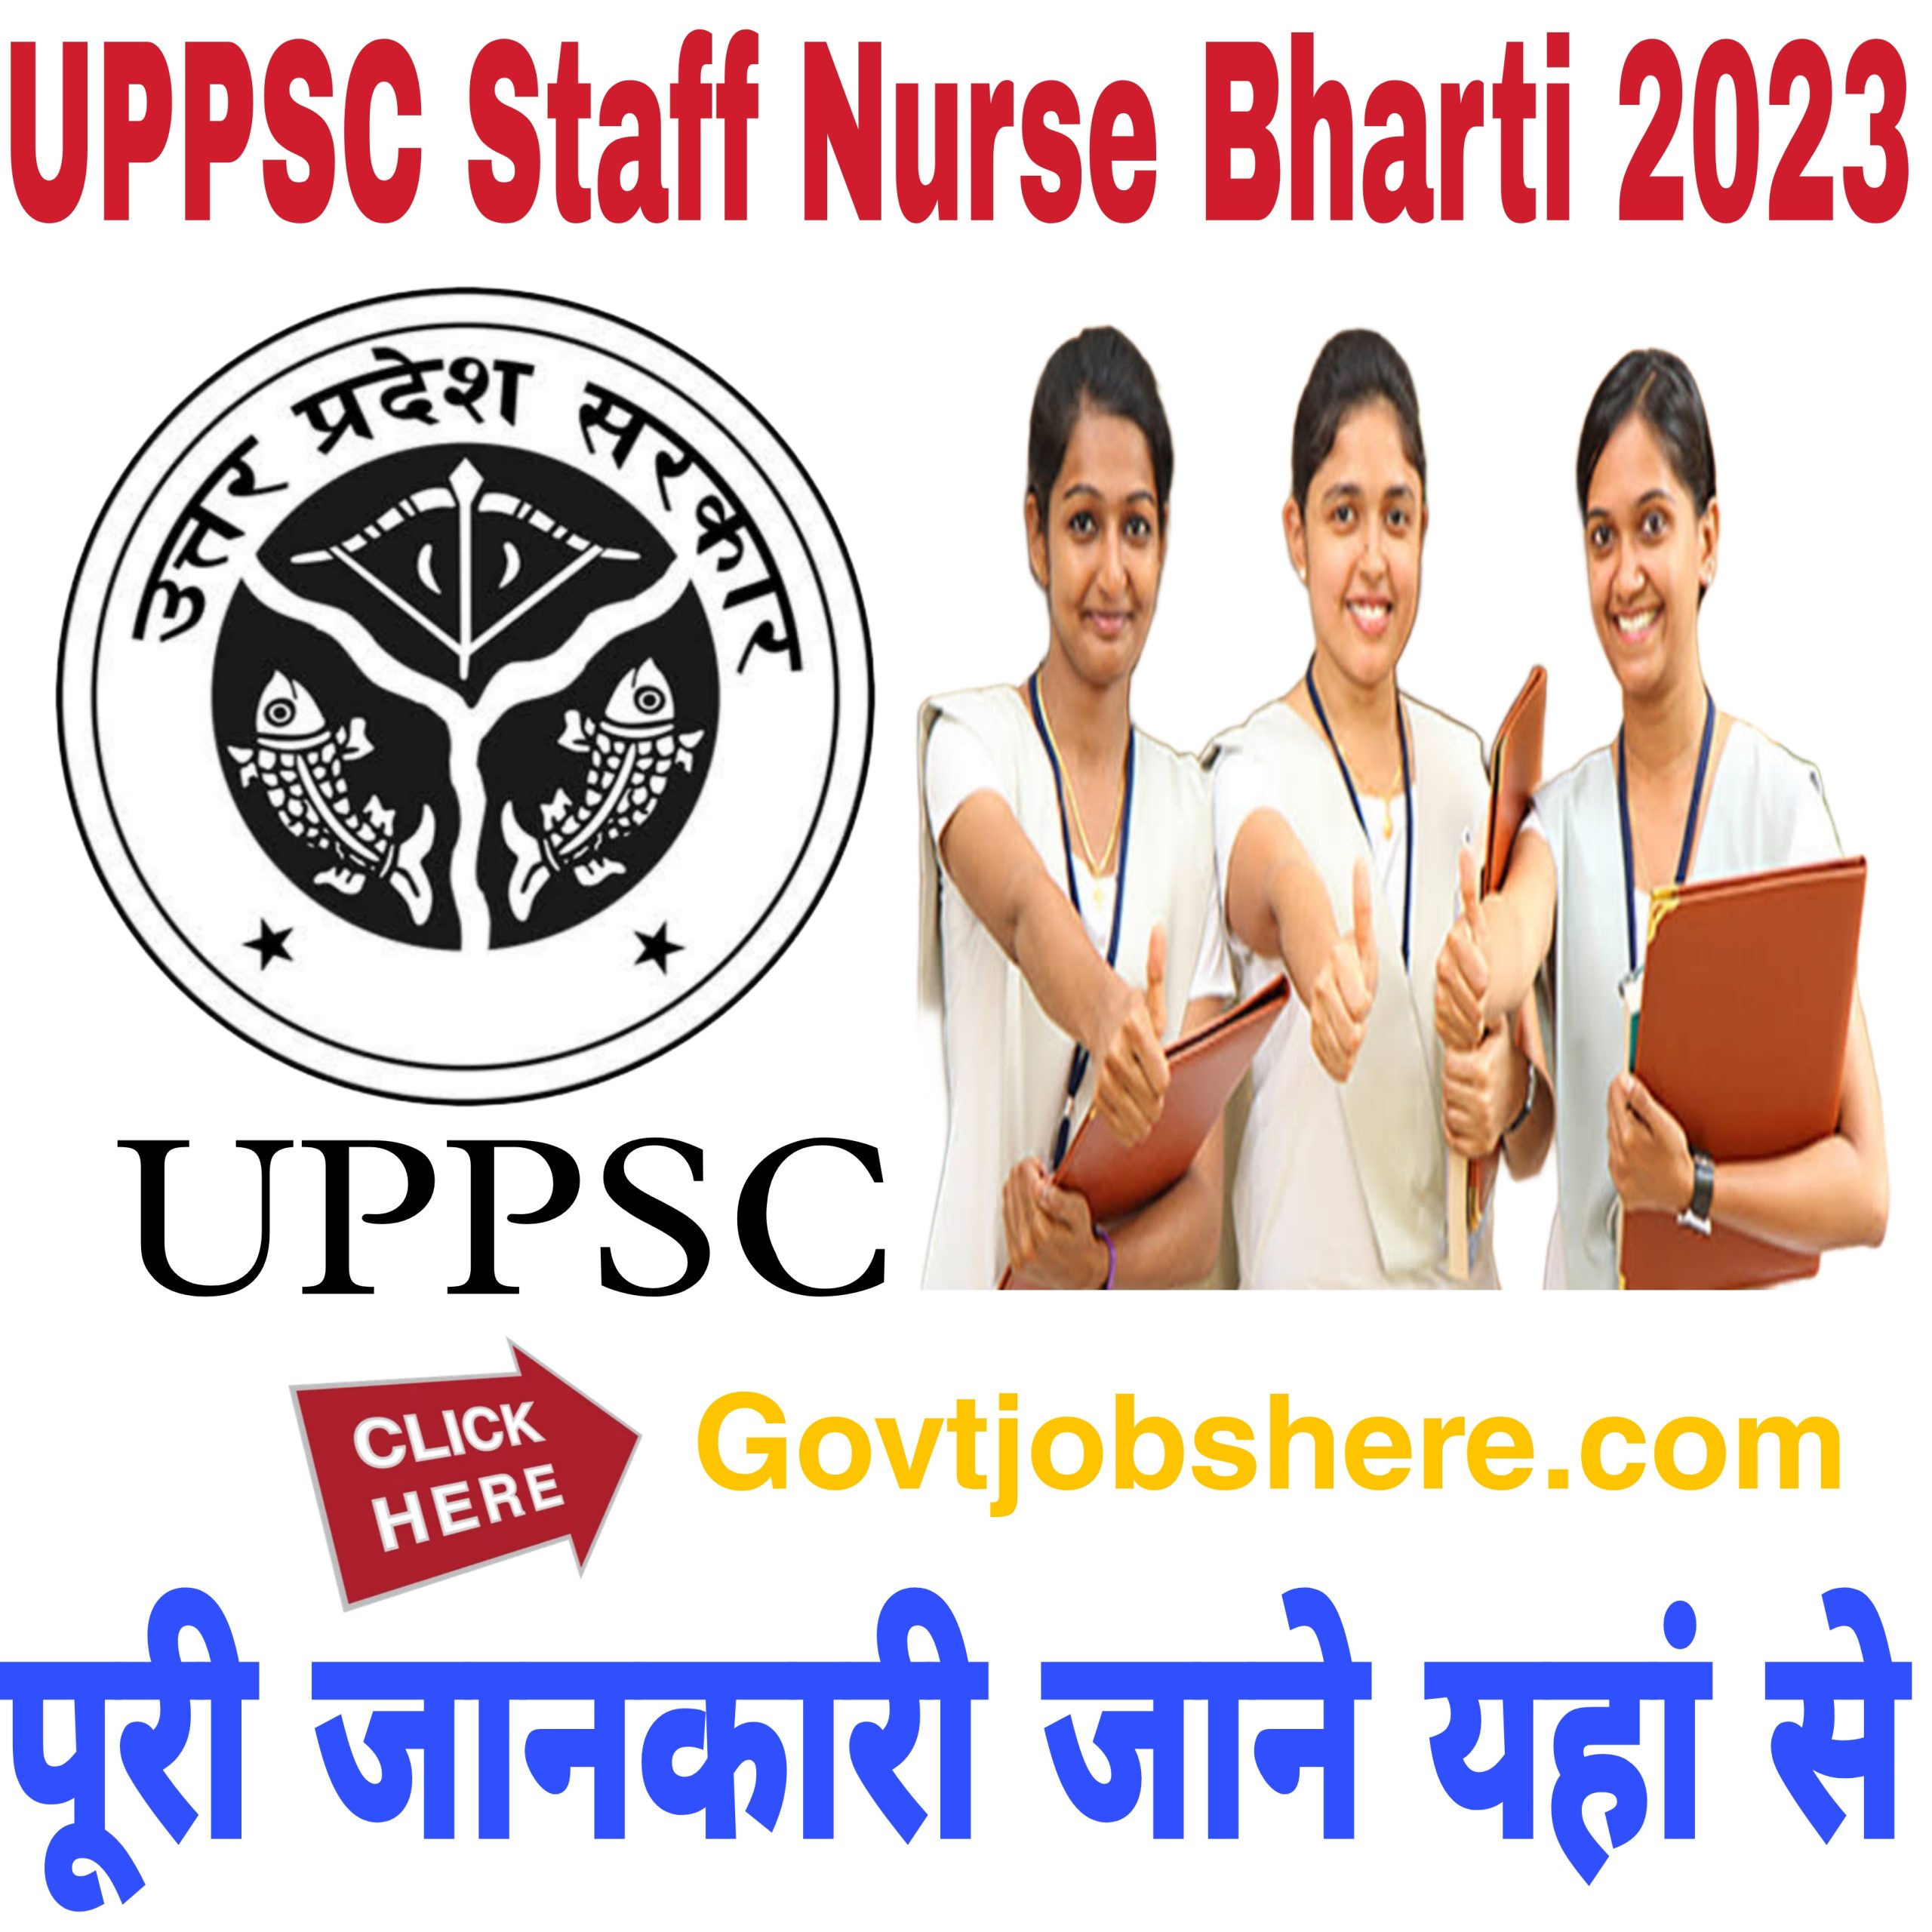 Uppsc Staff Nurse Recruitment 2023